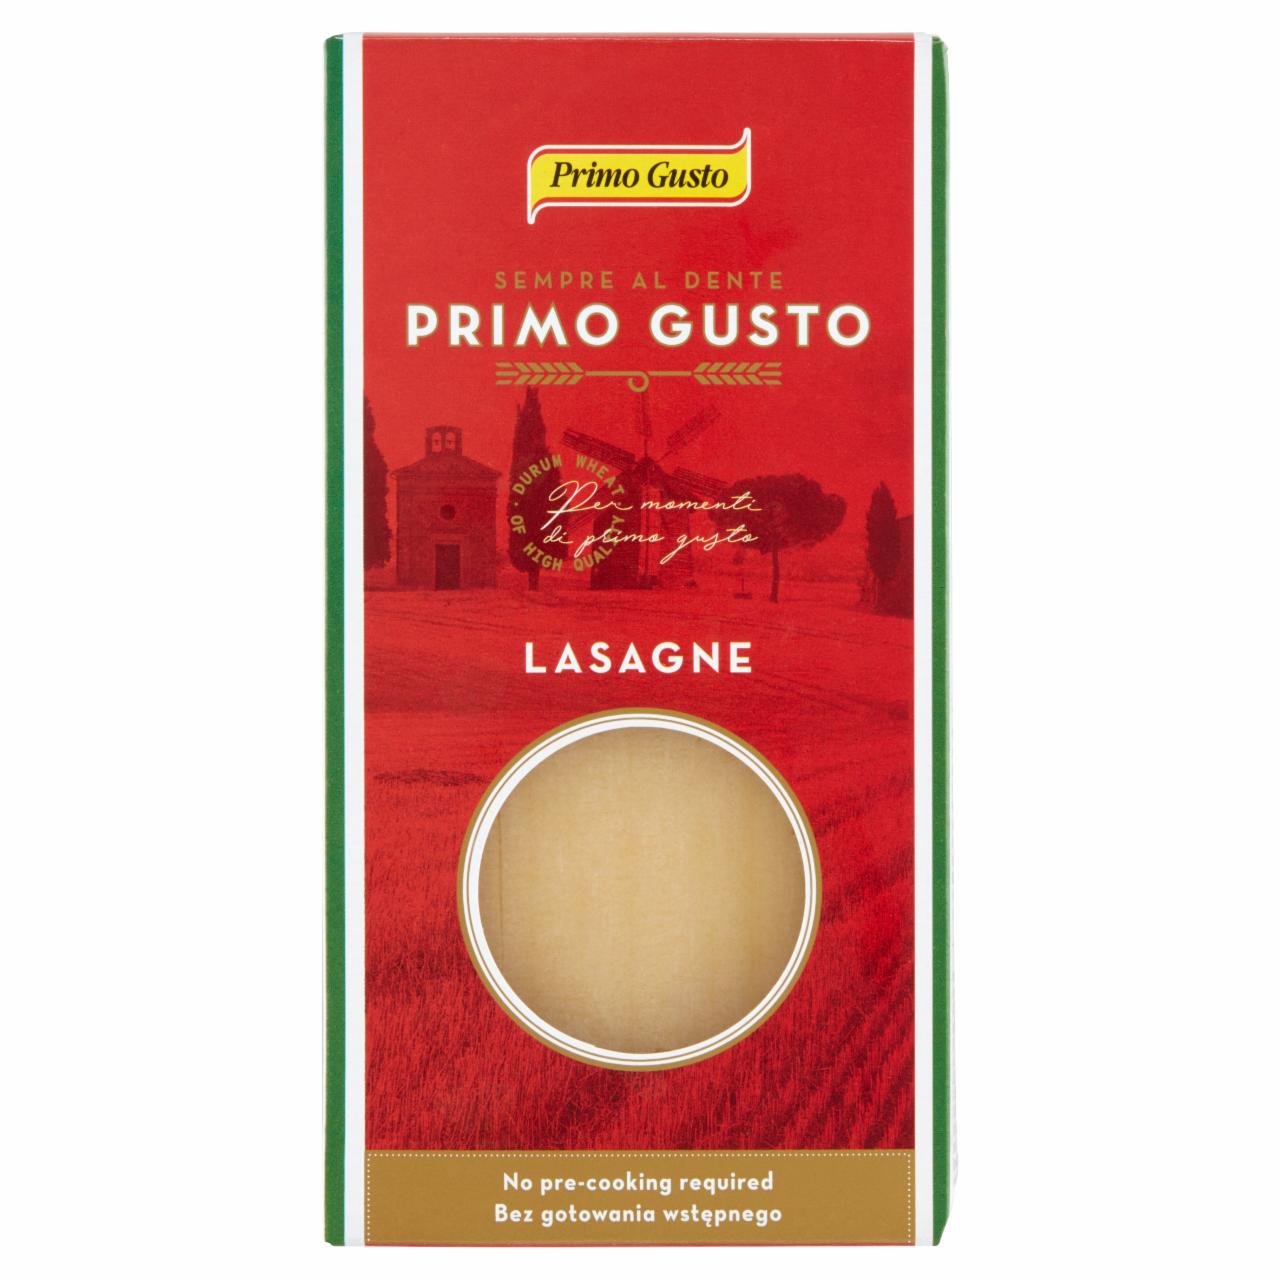 Zdjęcia - Primo Gusto Makaron lasagne 500 g